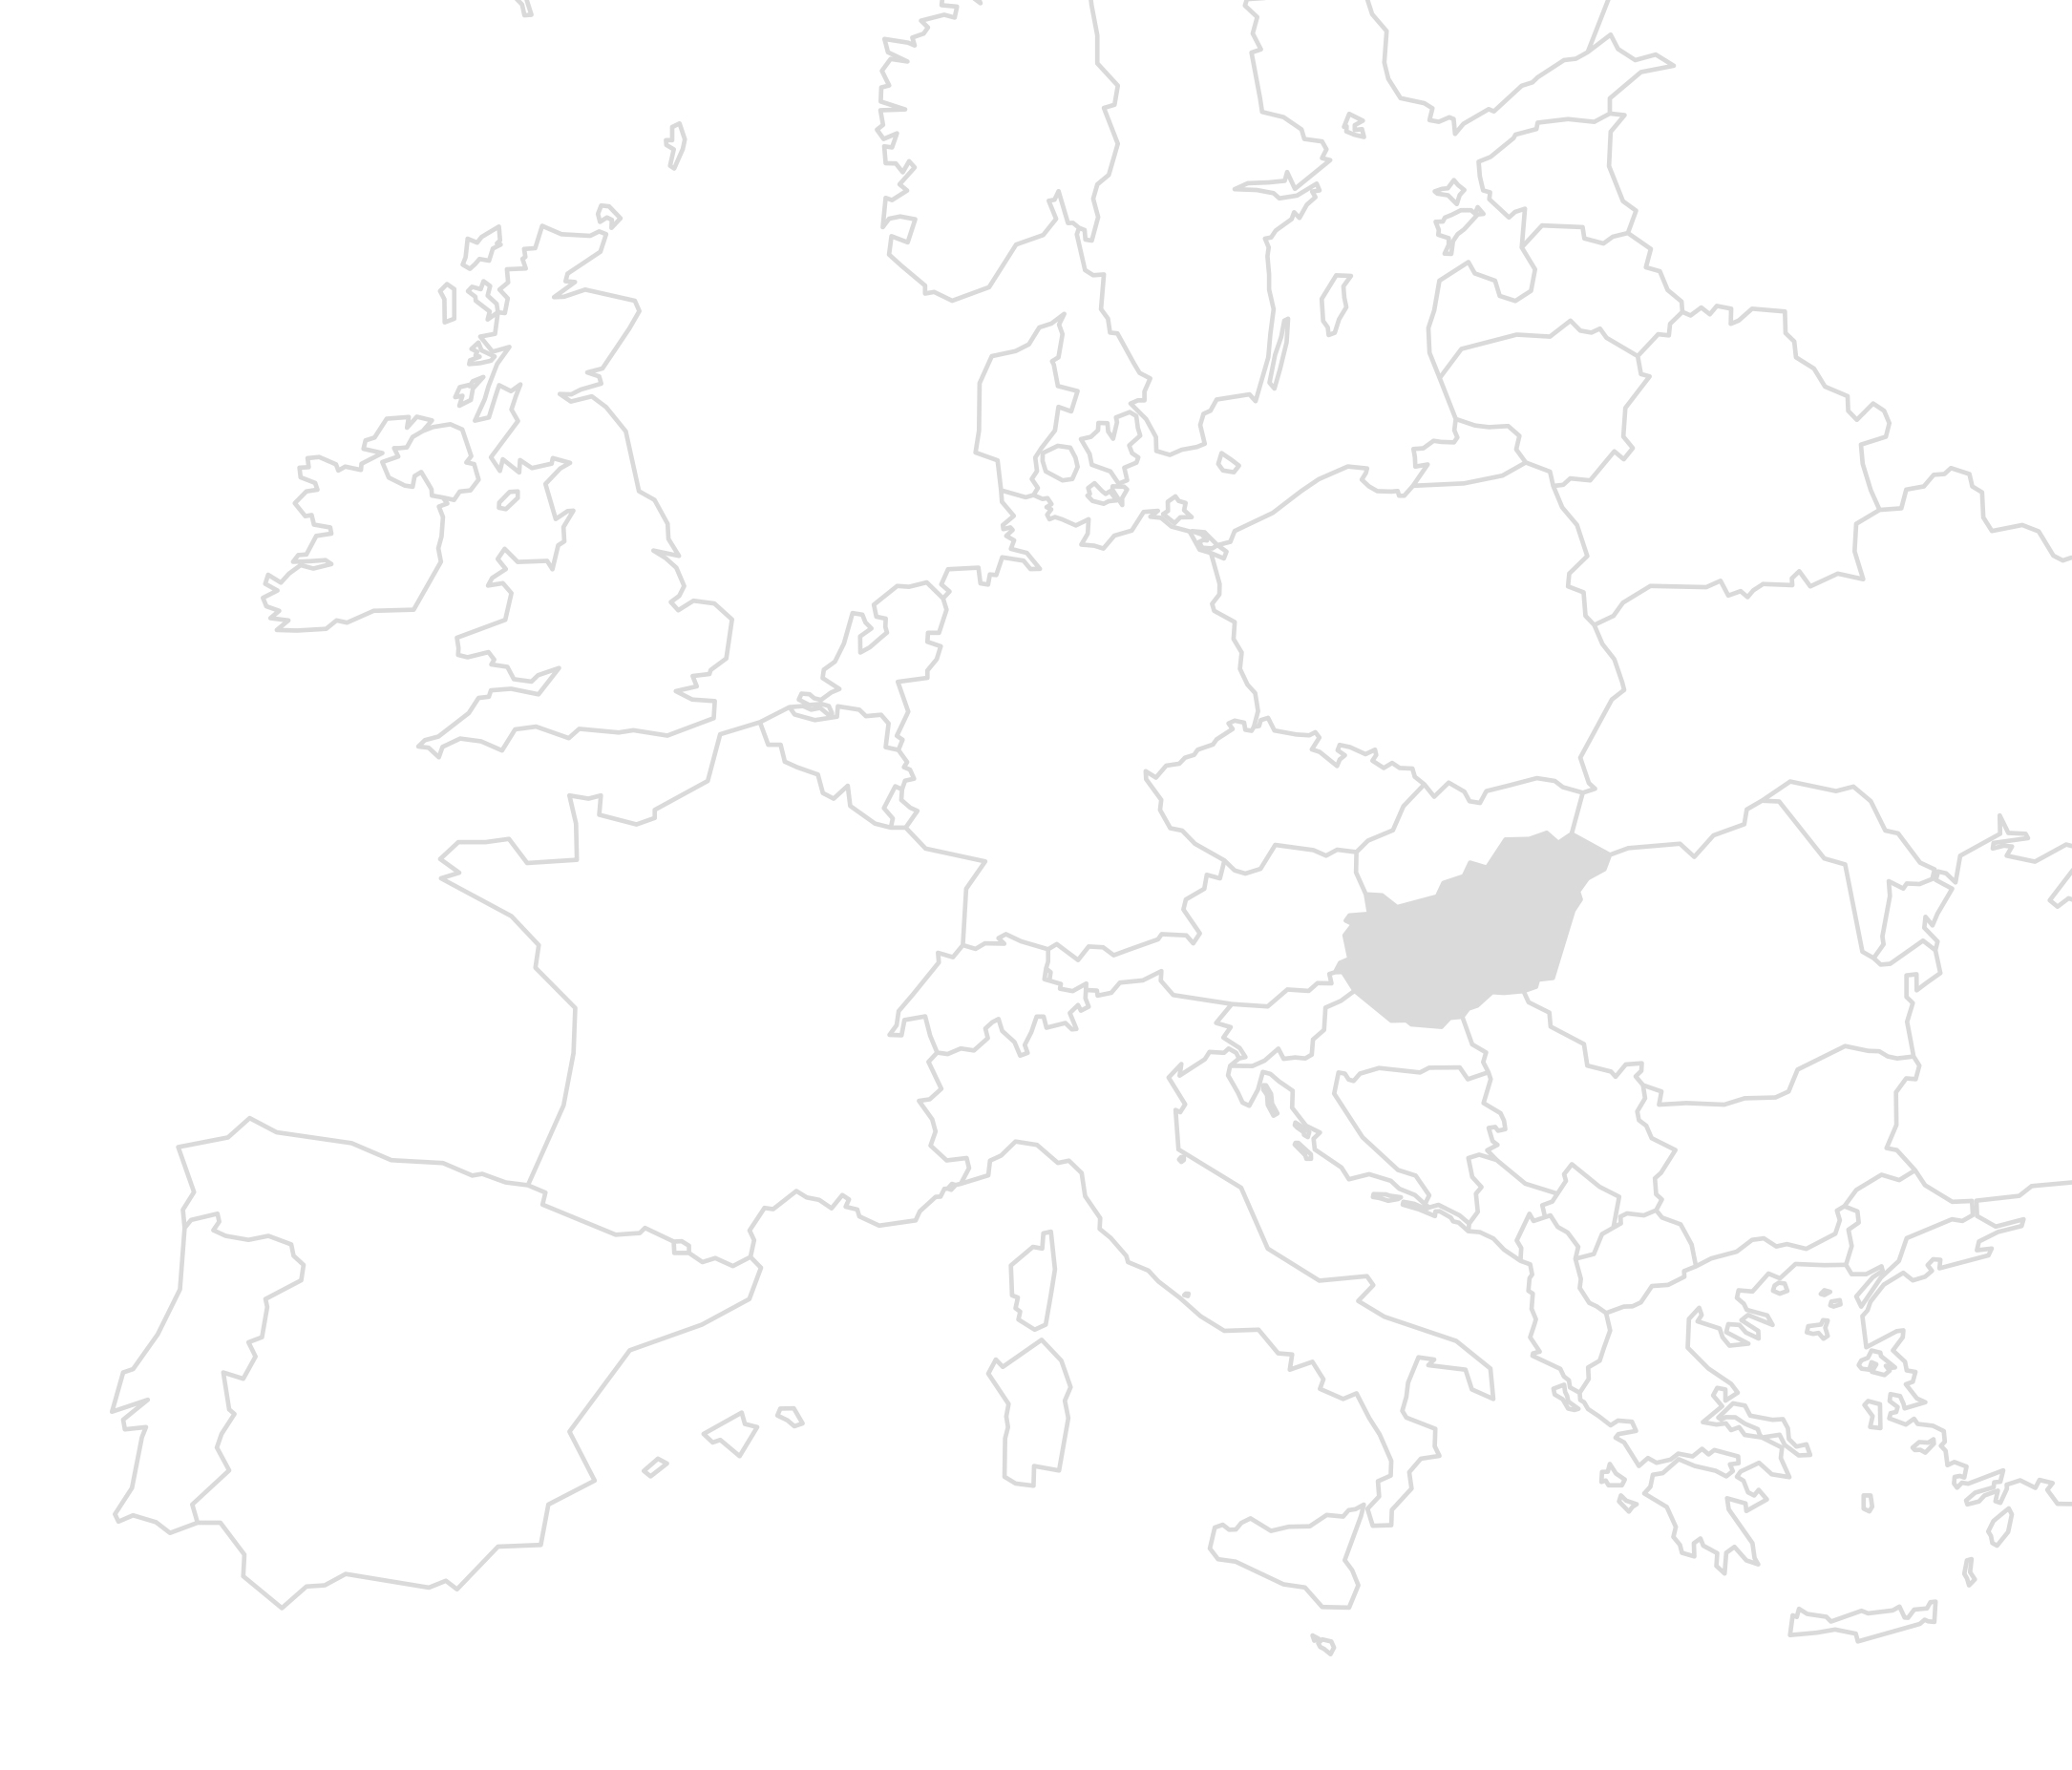 Europa Karte, Ungarn grau unterlegt